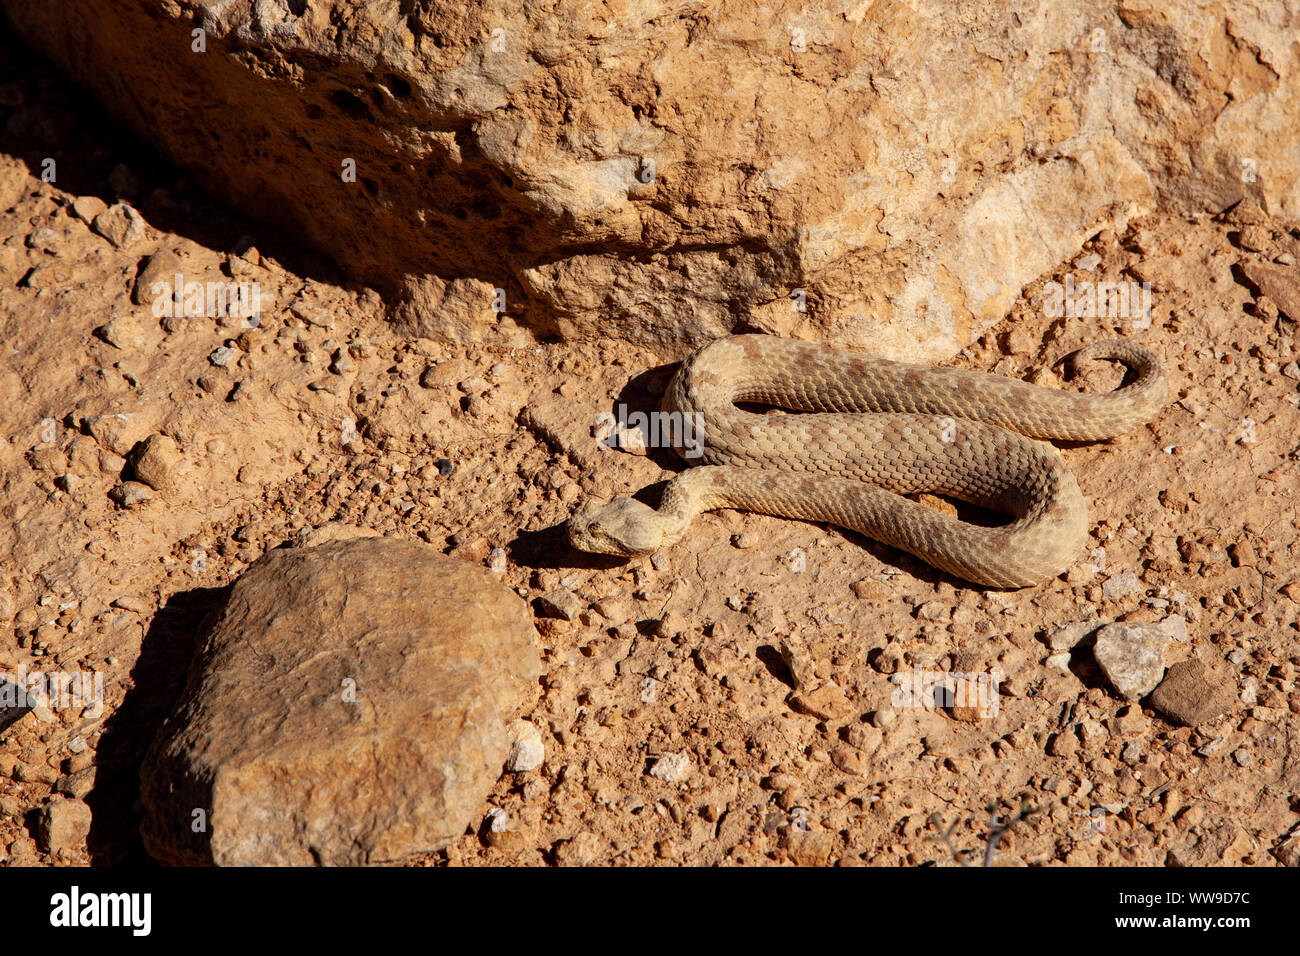 Field's horned viper (Pseudocerastes fieldi ) Stock Photo